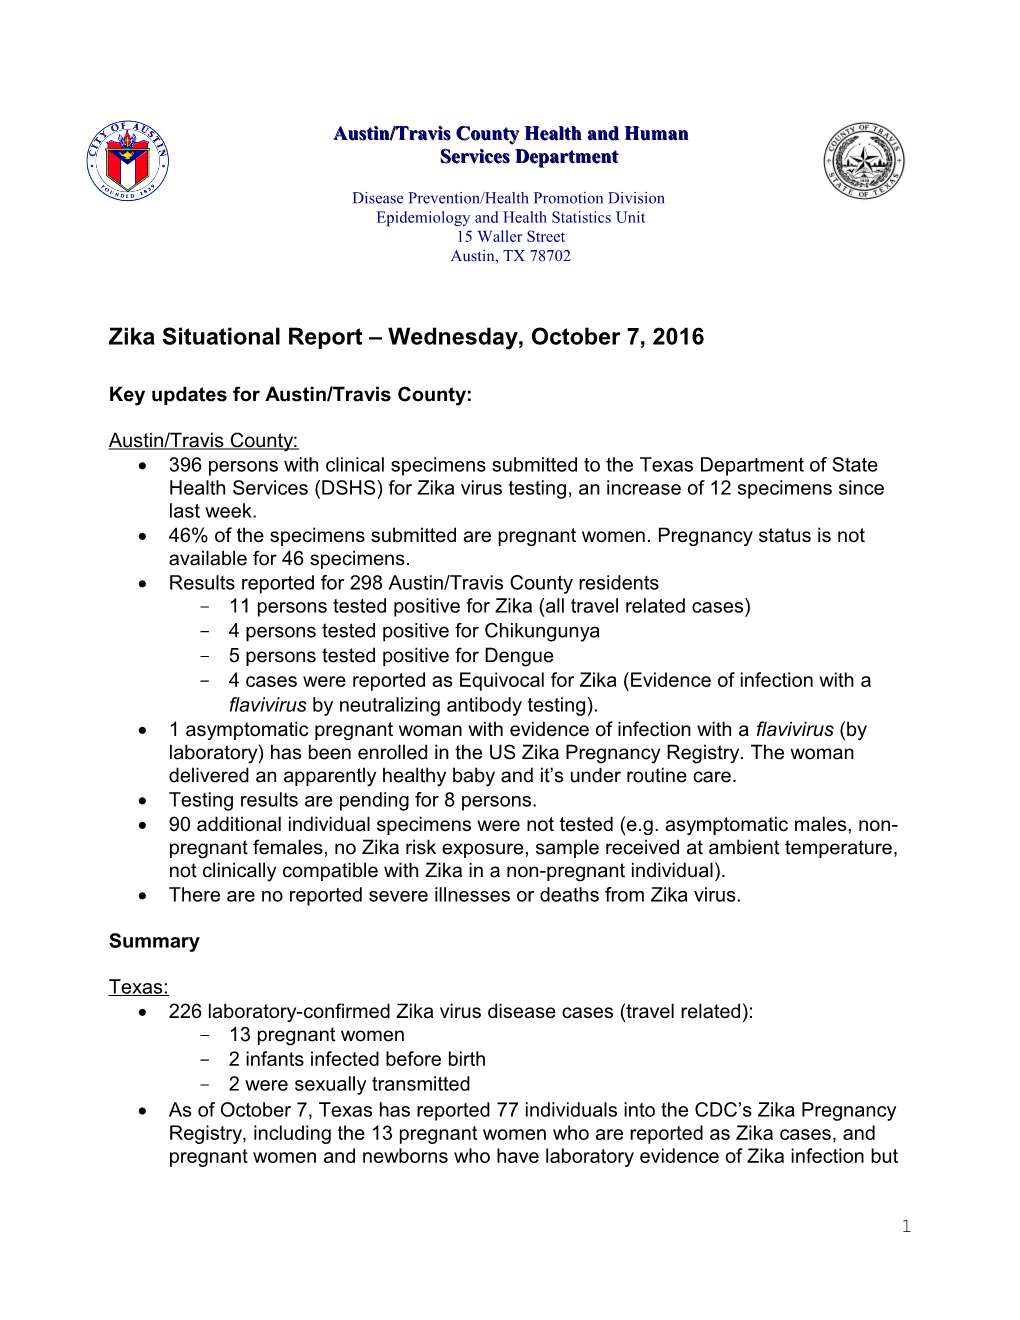 Zika Situational Report Wednesday, October 7, 2016